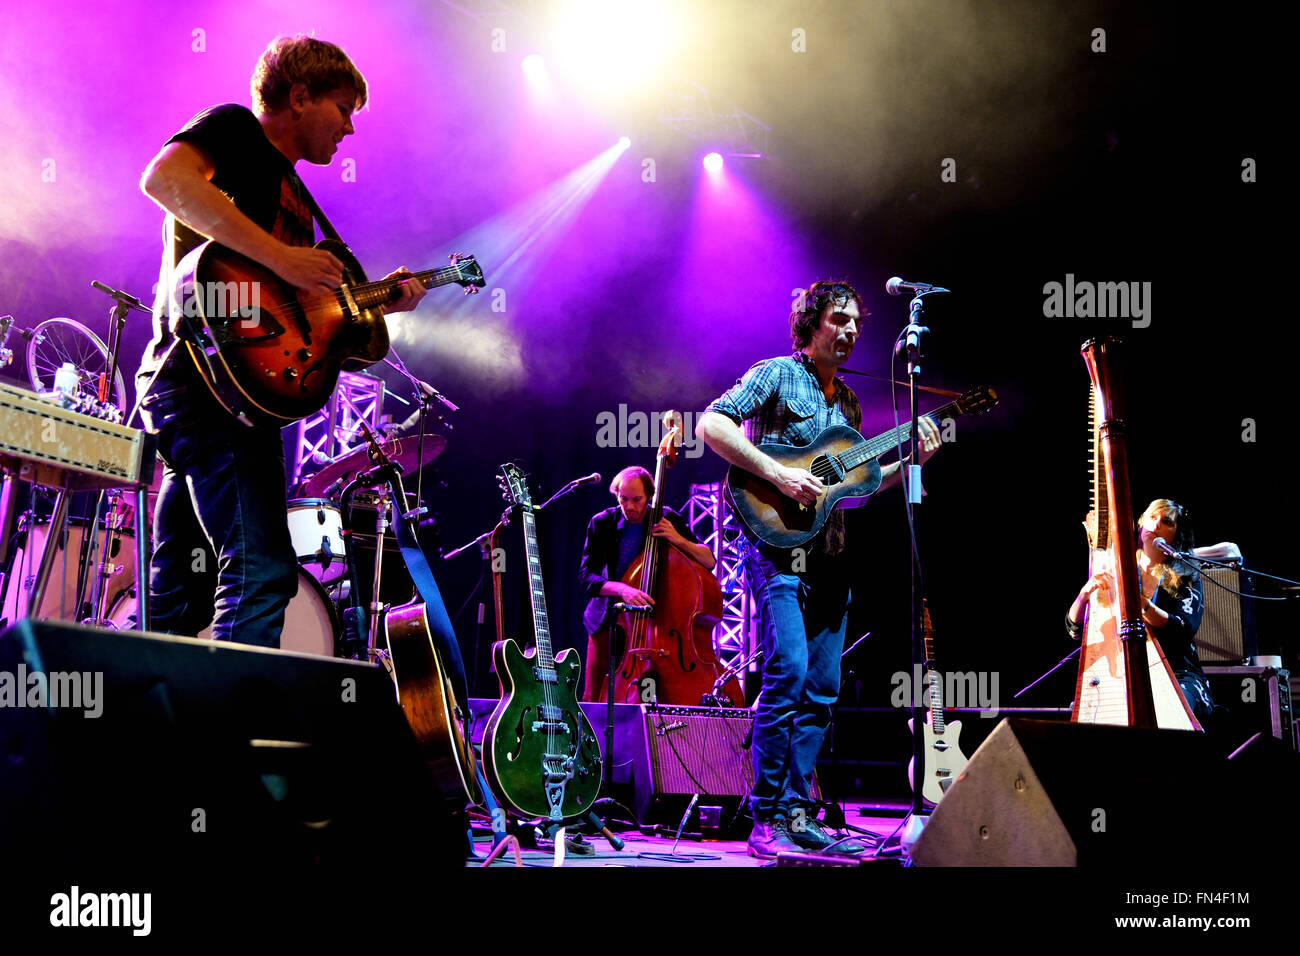 BILBAO, Spanien - 31 Okt.: The Barr Brothers (Band) live-Performance beim Bime-Festival am 31. Oktober 2014 in Bilbao, Spanien. Stockfoto